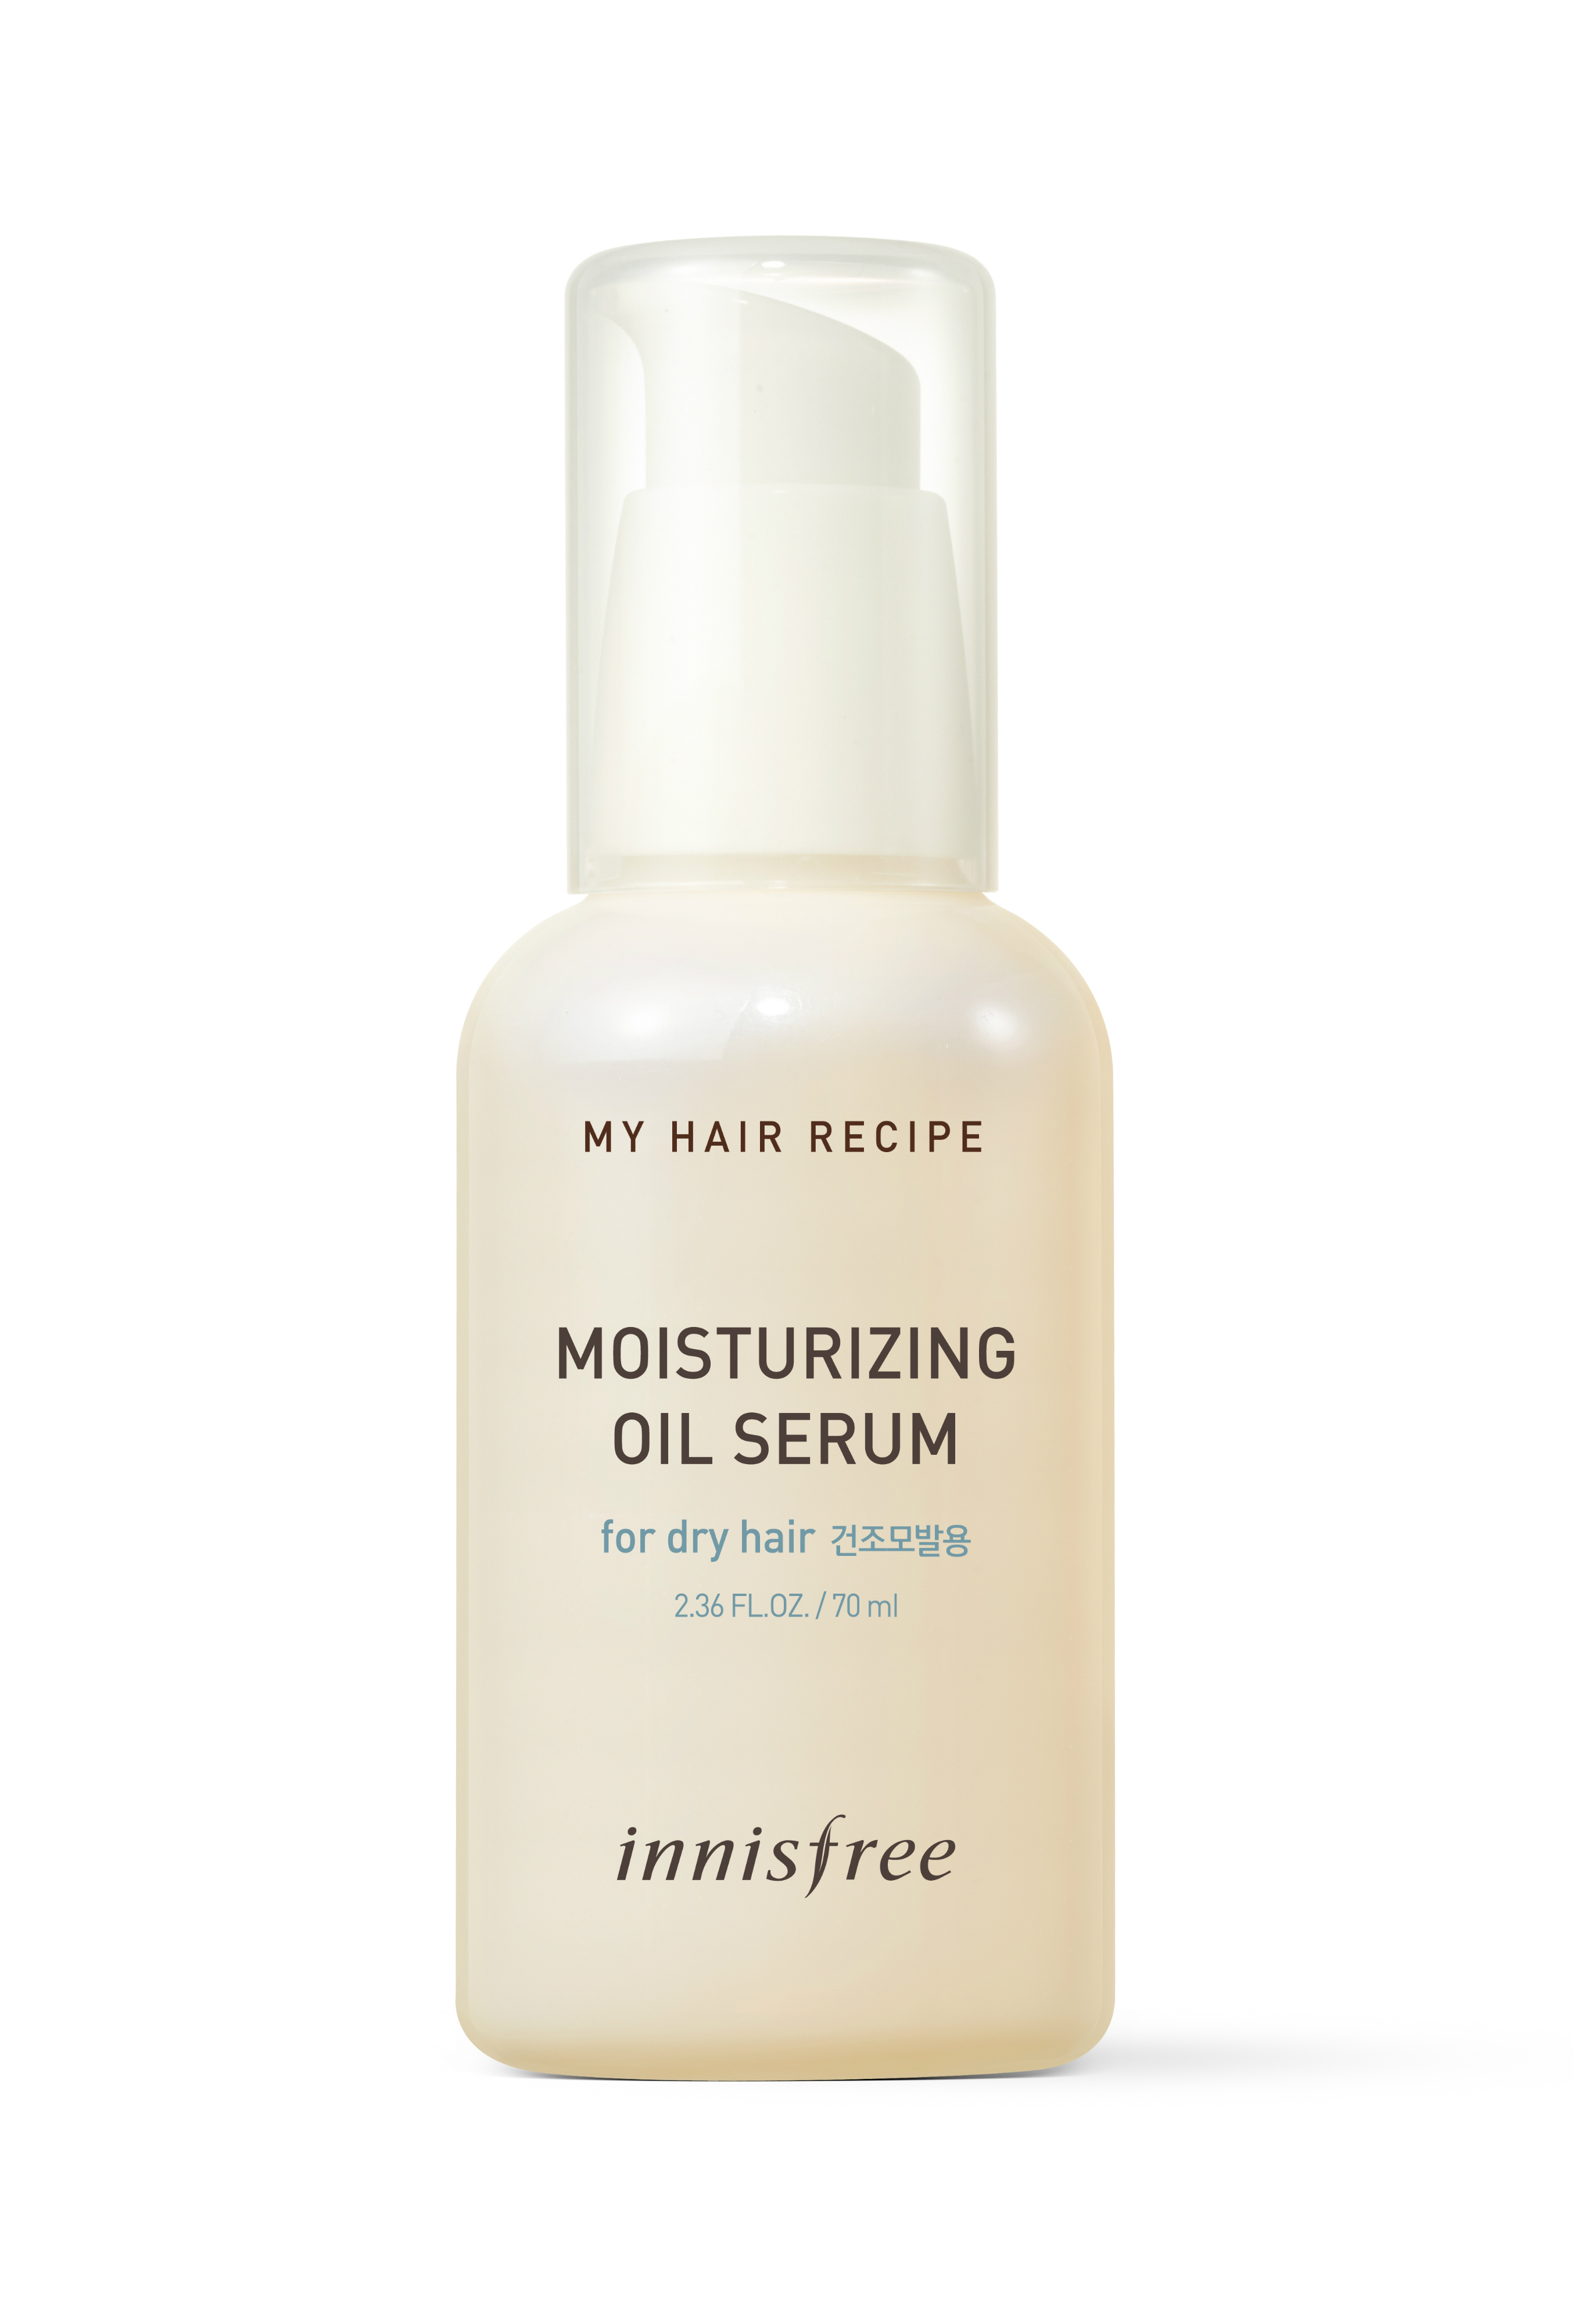 innisfree My Hair Recipe Moisturizing Oil Serum (RM58.00/70ml)-Pamper.my